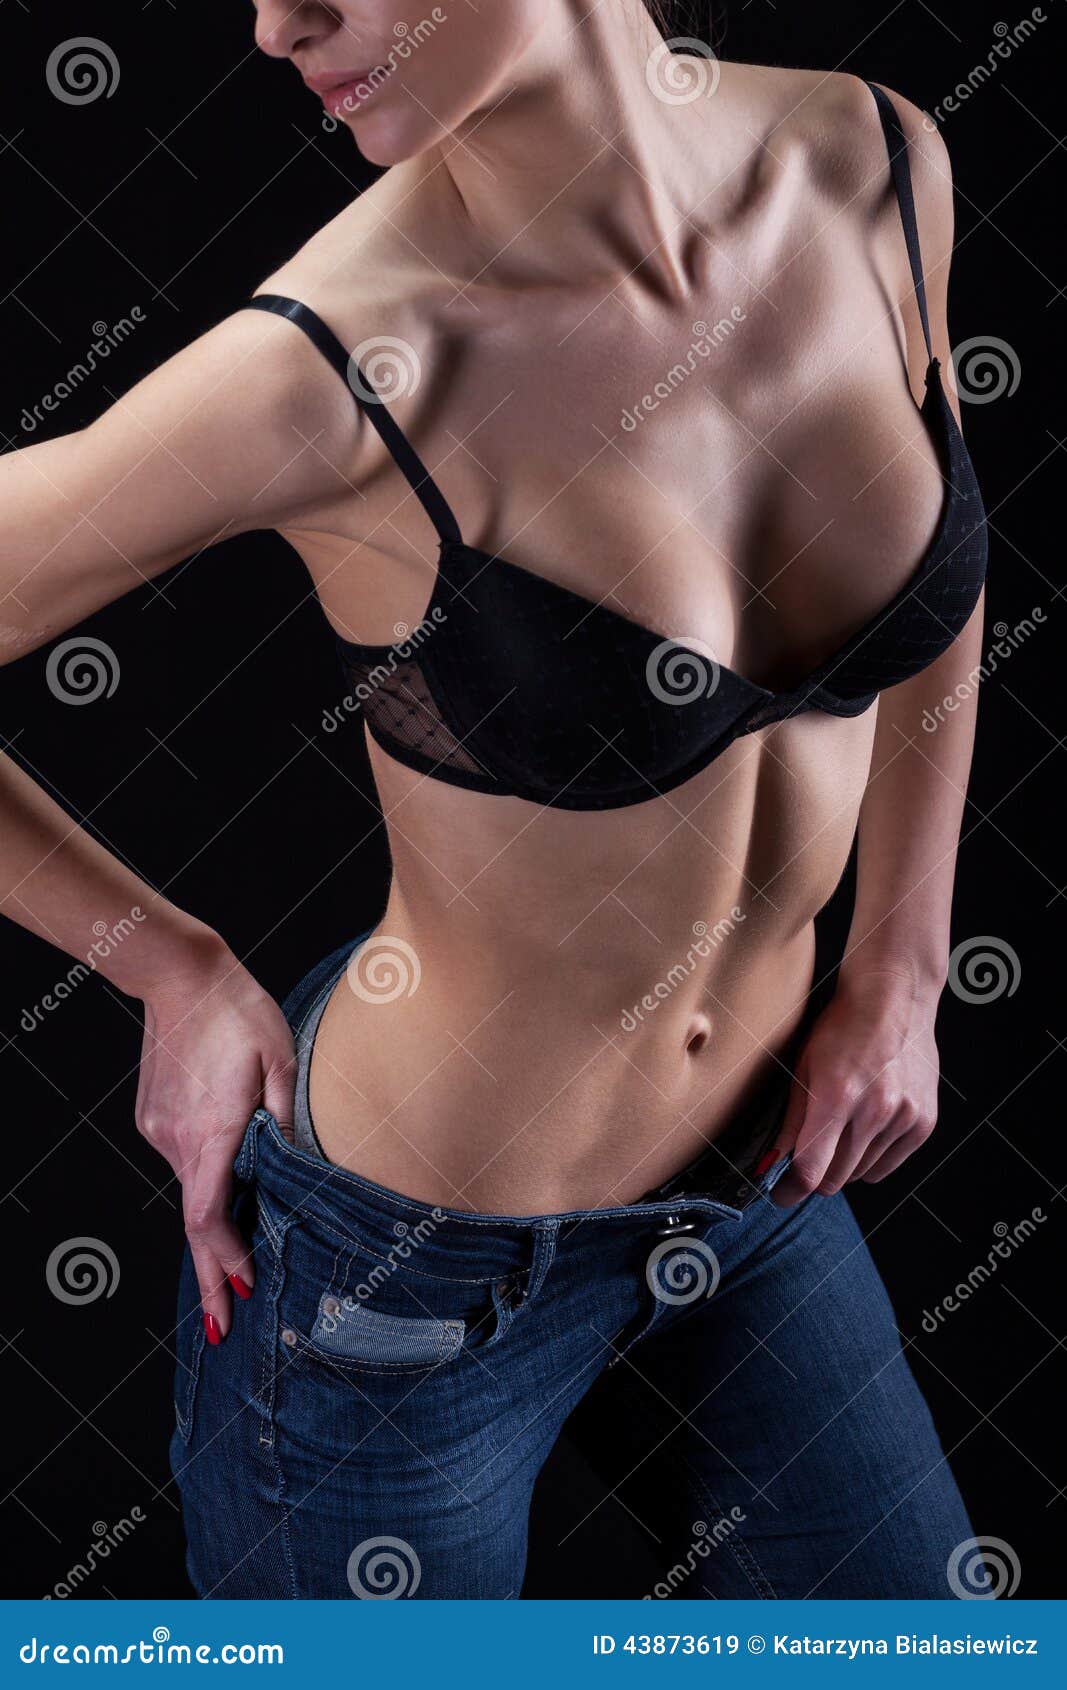 brooke crosswhite add hot girl wearing bra photo